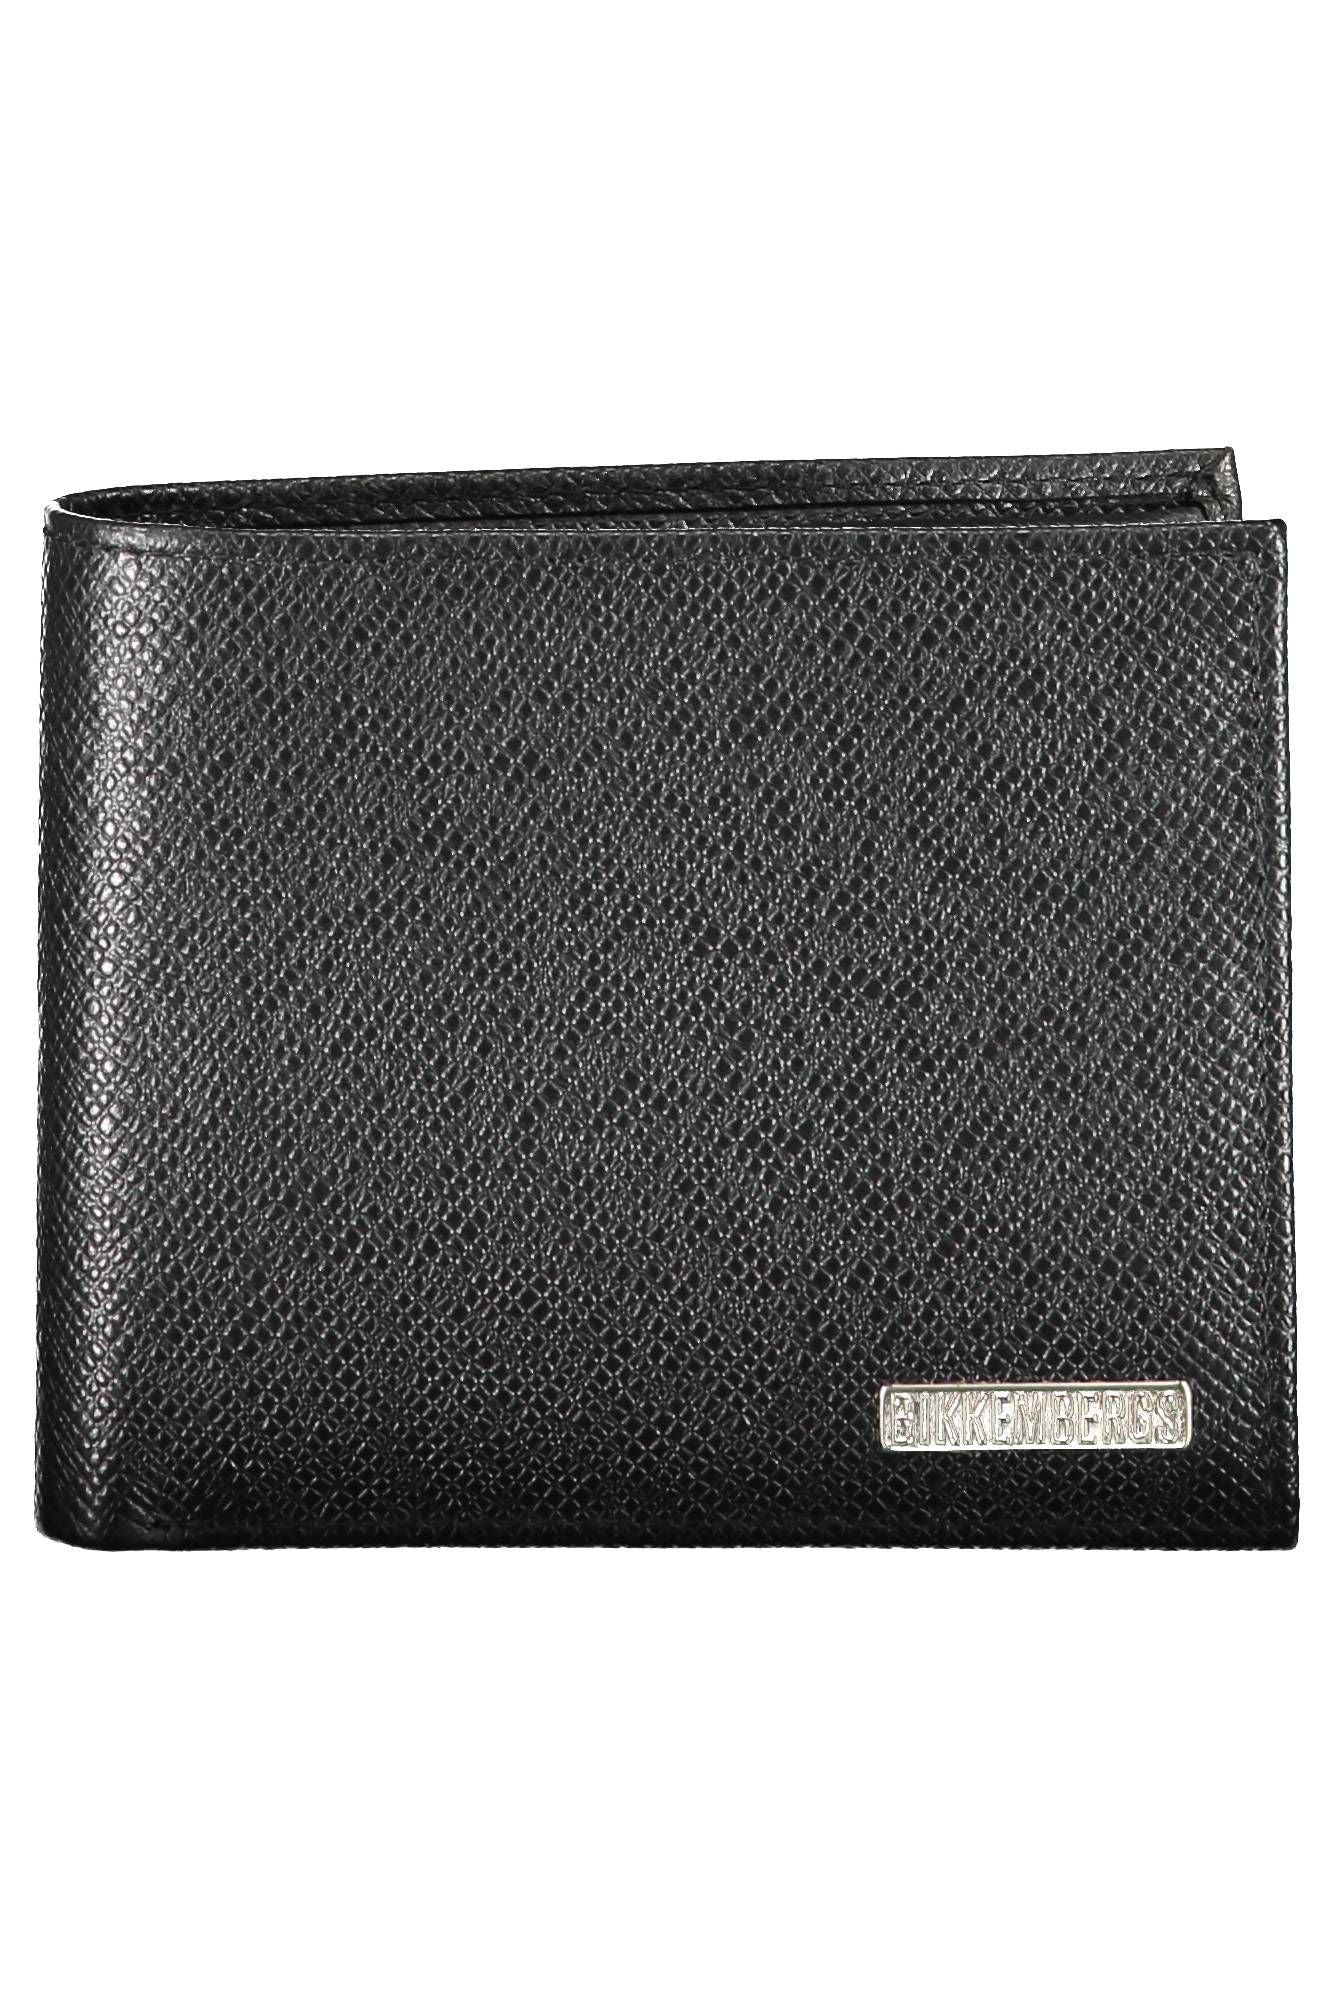 Bikkembergs Black Leather Wallet